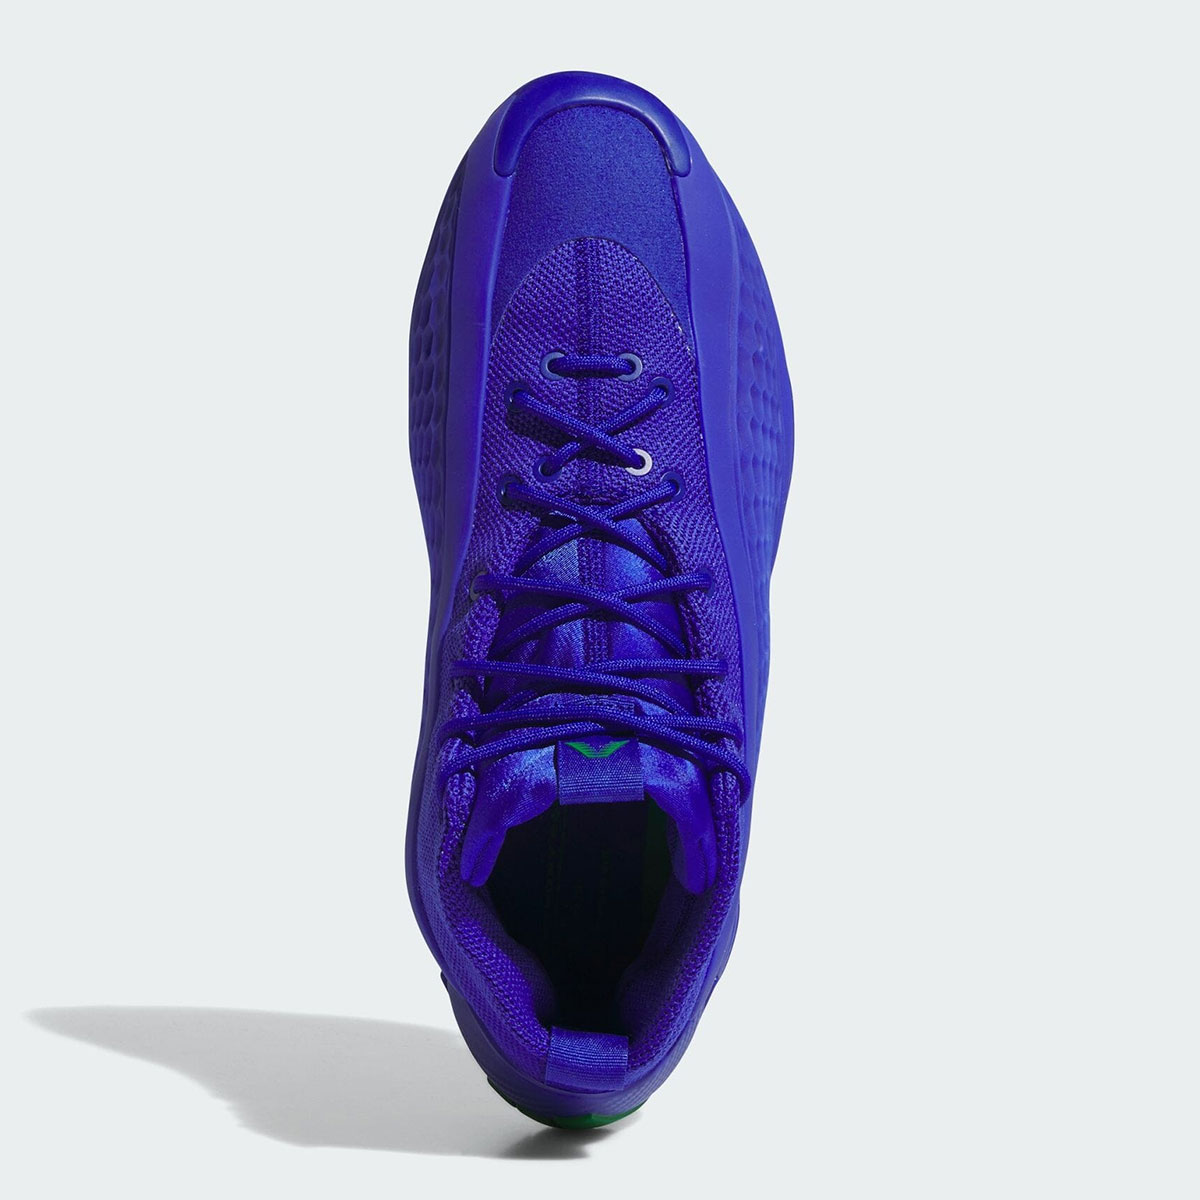 Adidas Ae1 Chaussures adidas Originals Forum Low W FZ5946 Ftwwht Prptnt Blilil Velocity Blue If1864 3